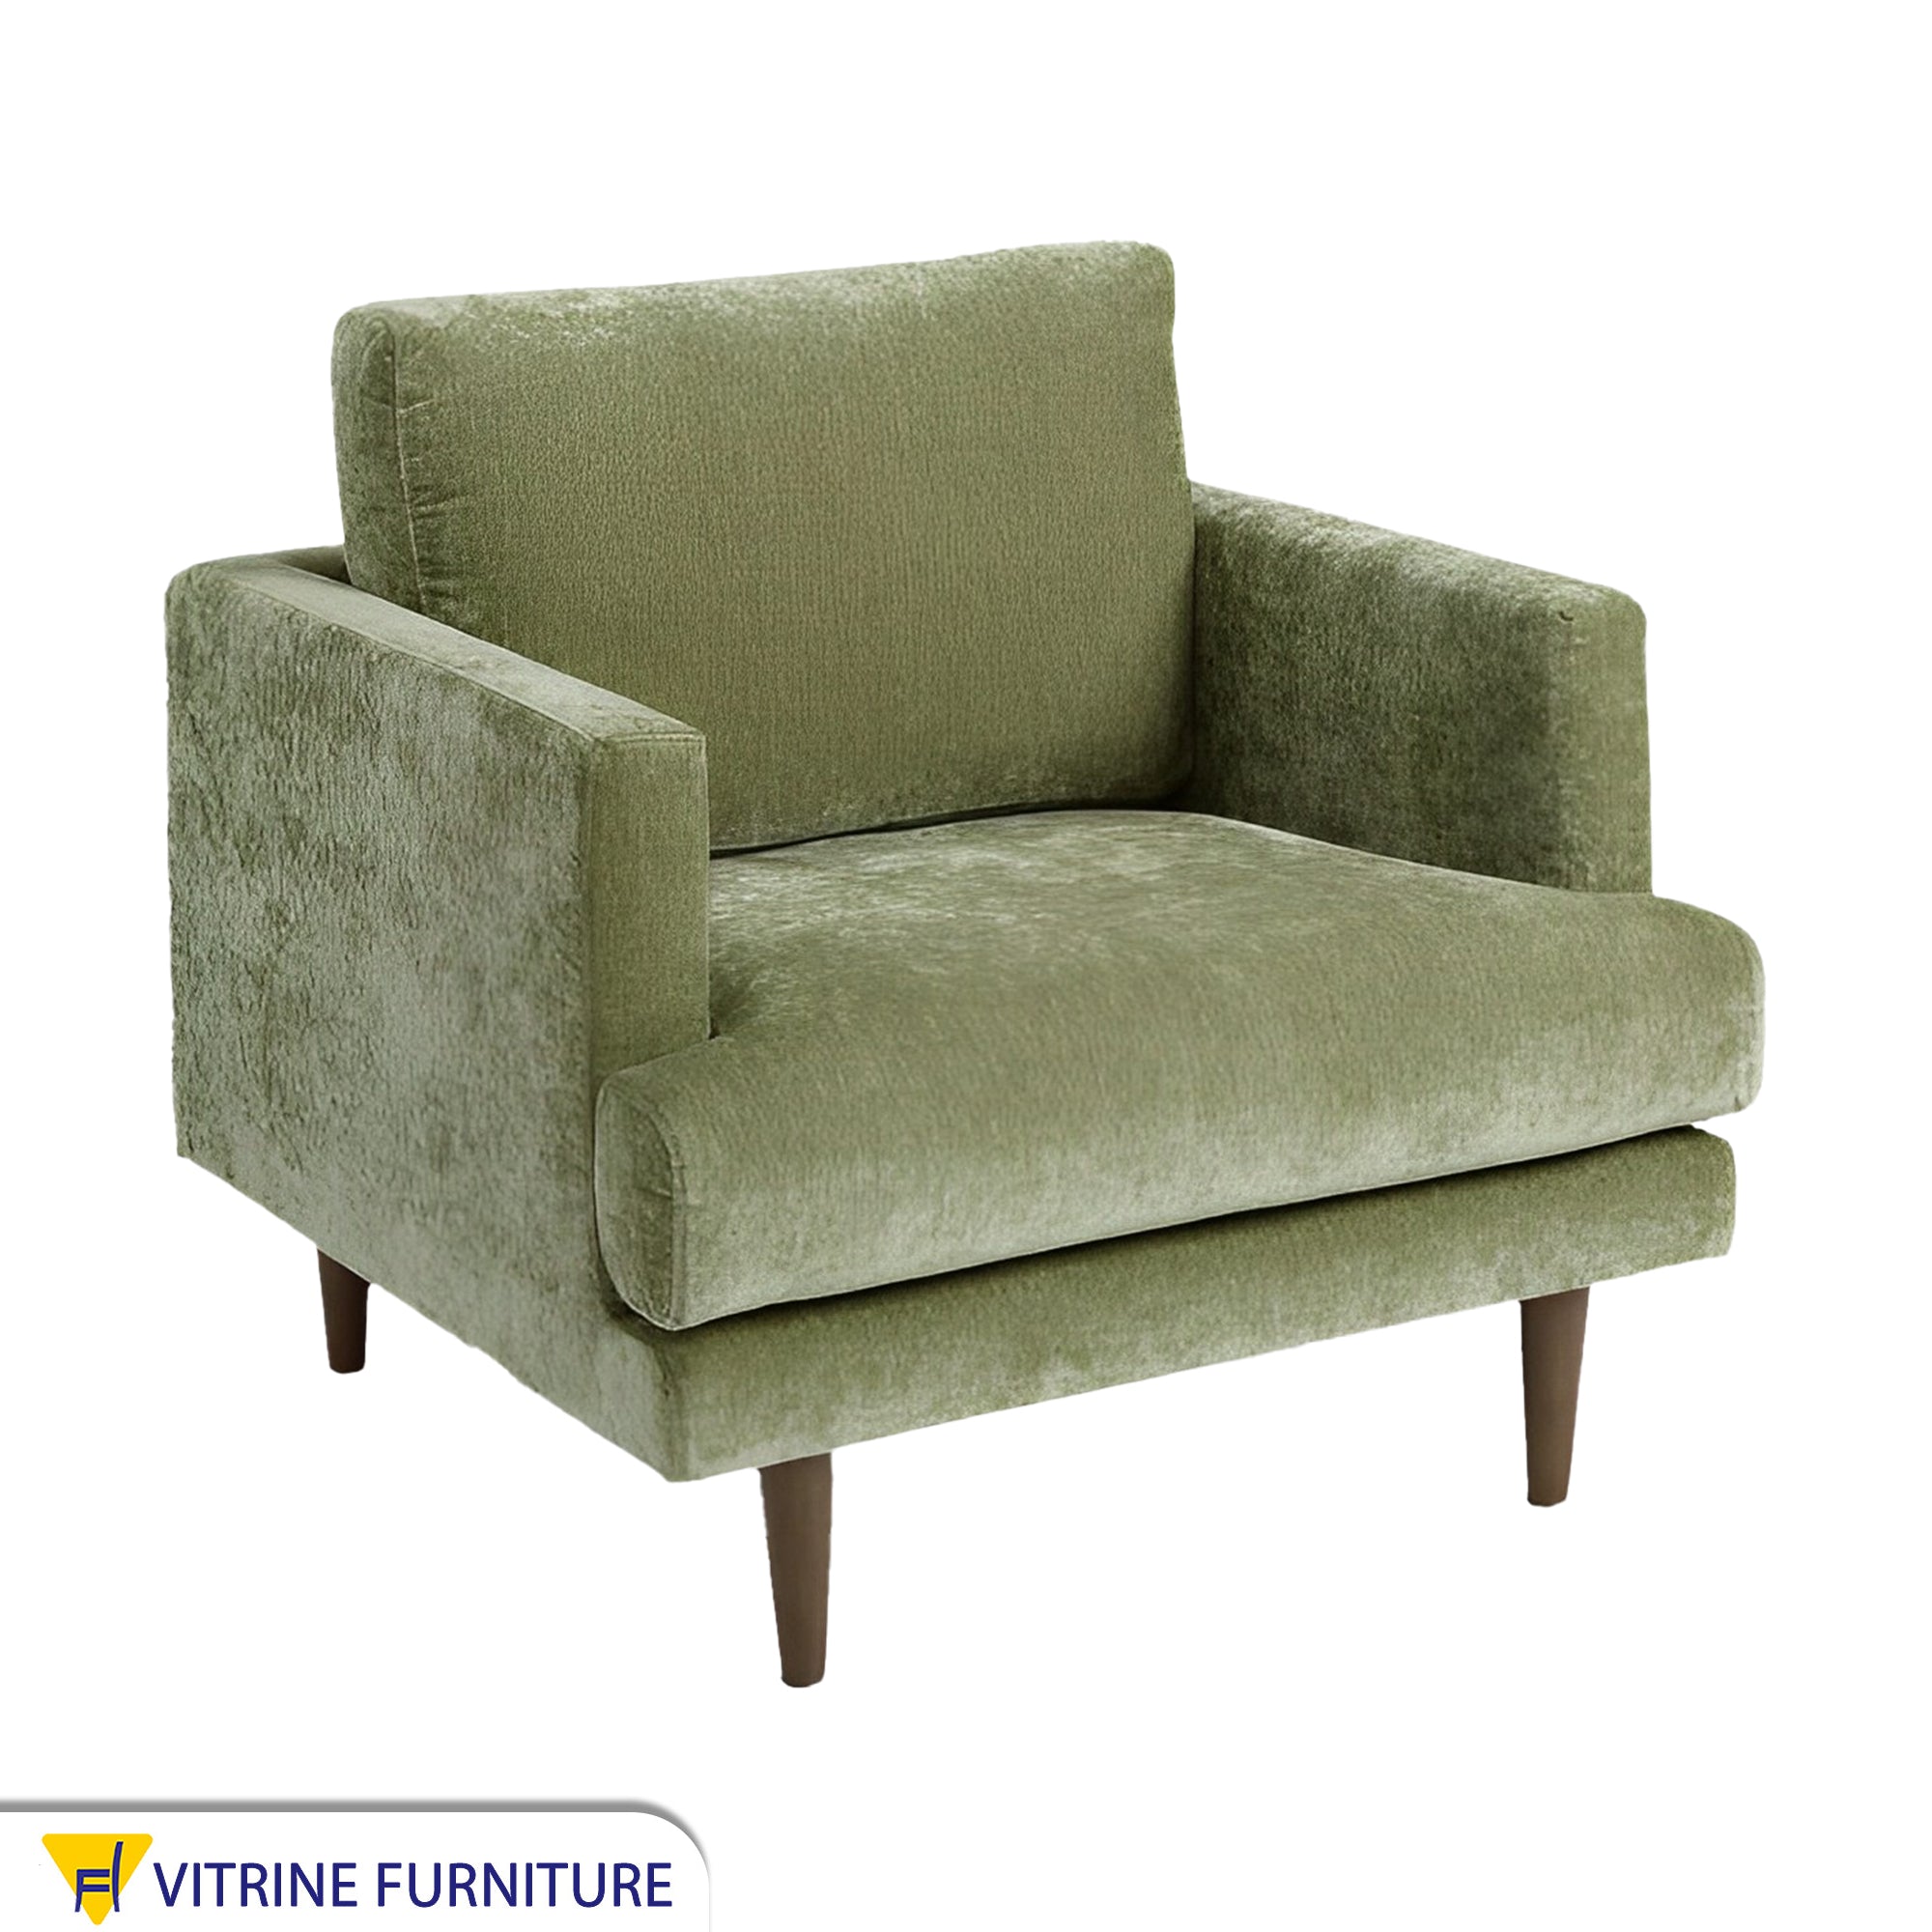 Modern olive green chair